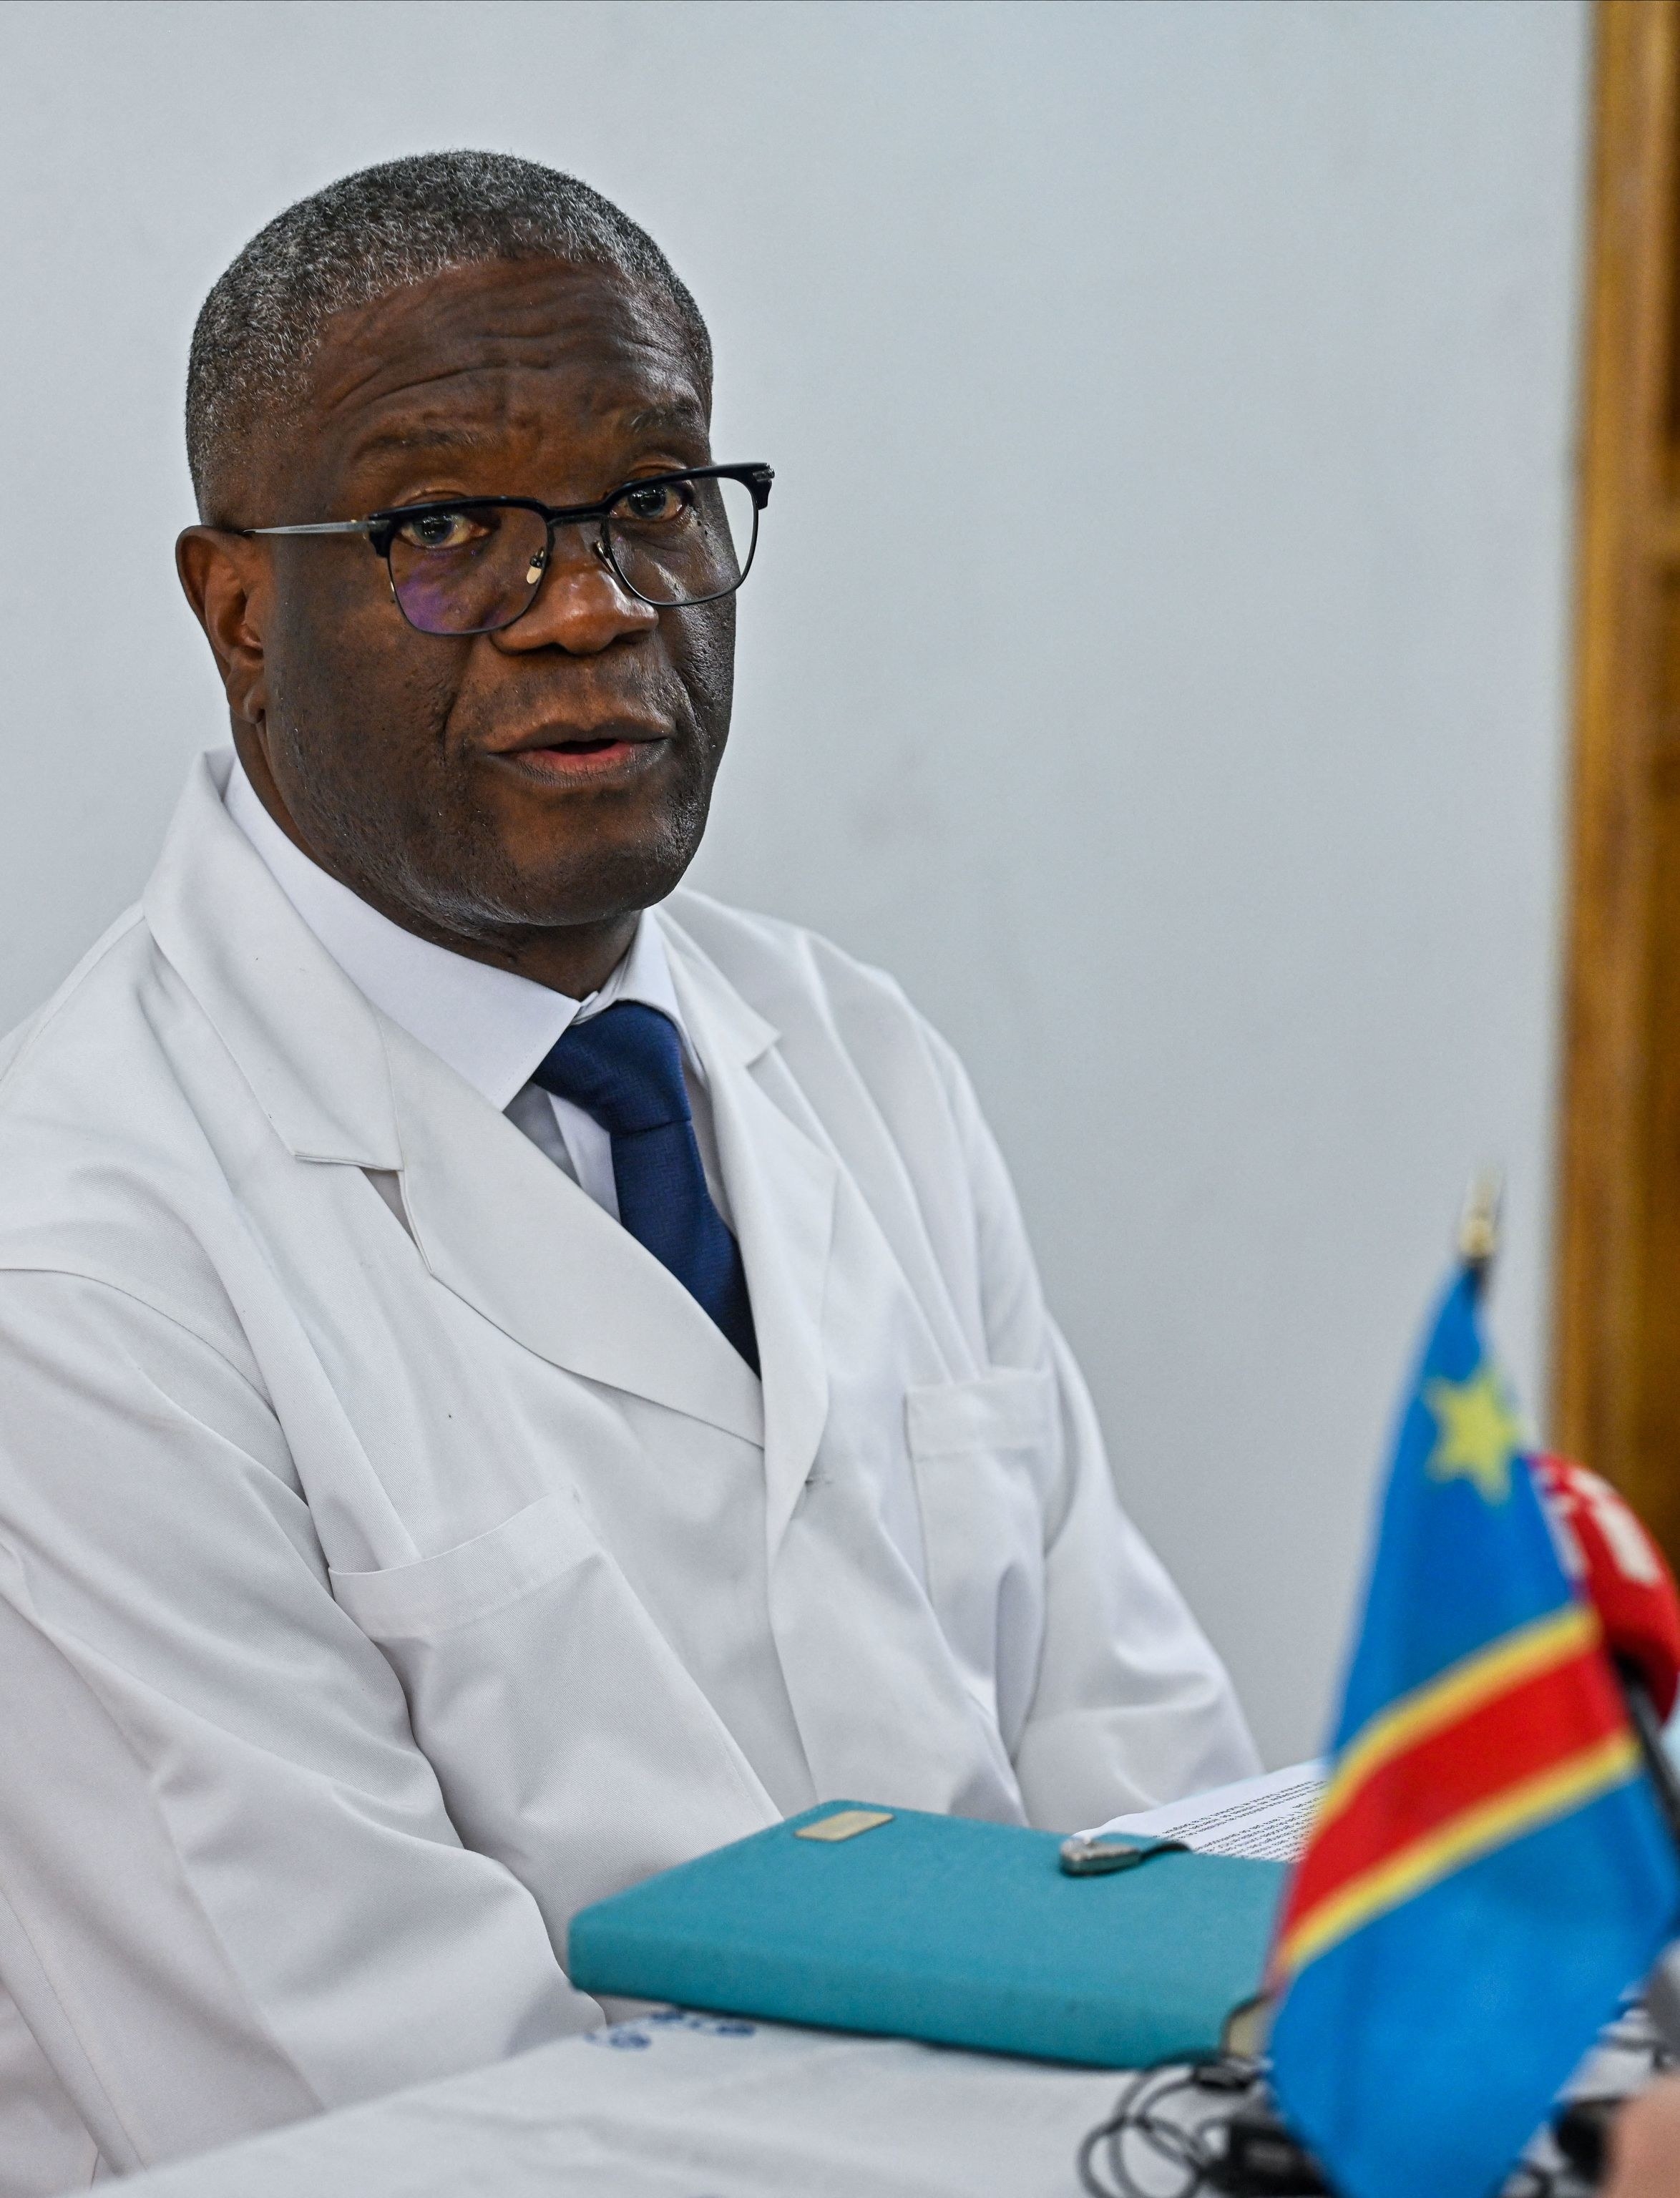 Denis Mukwege sitting